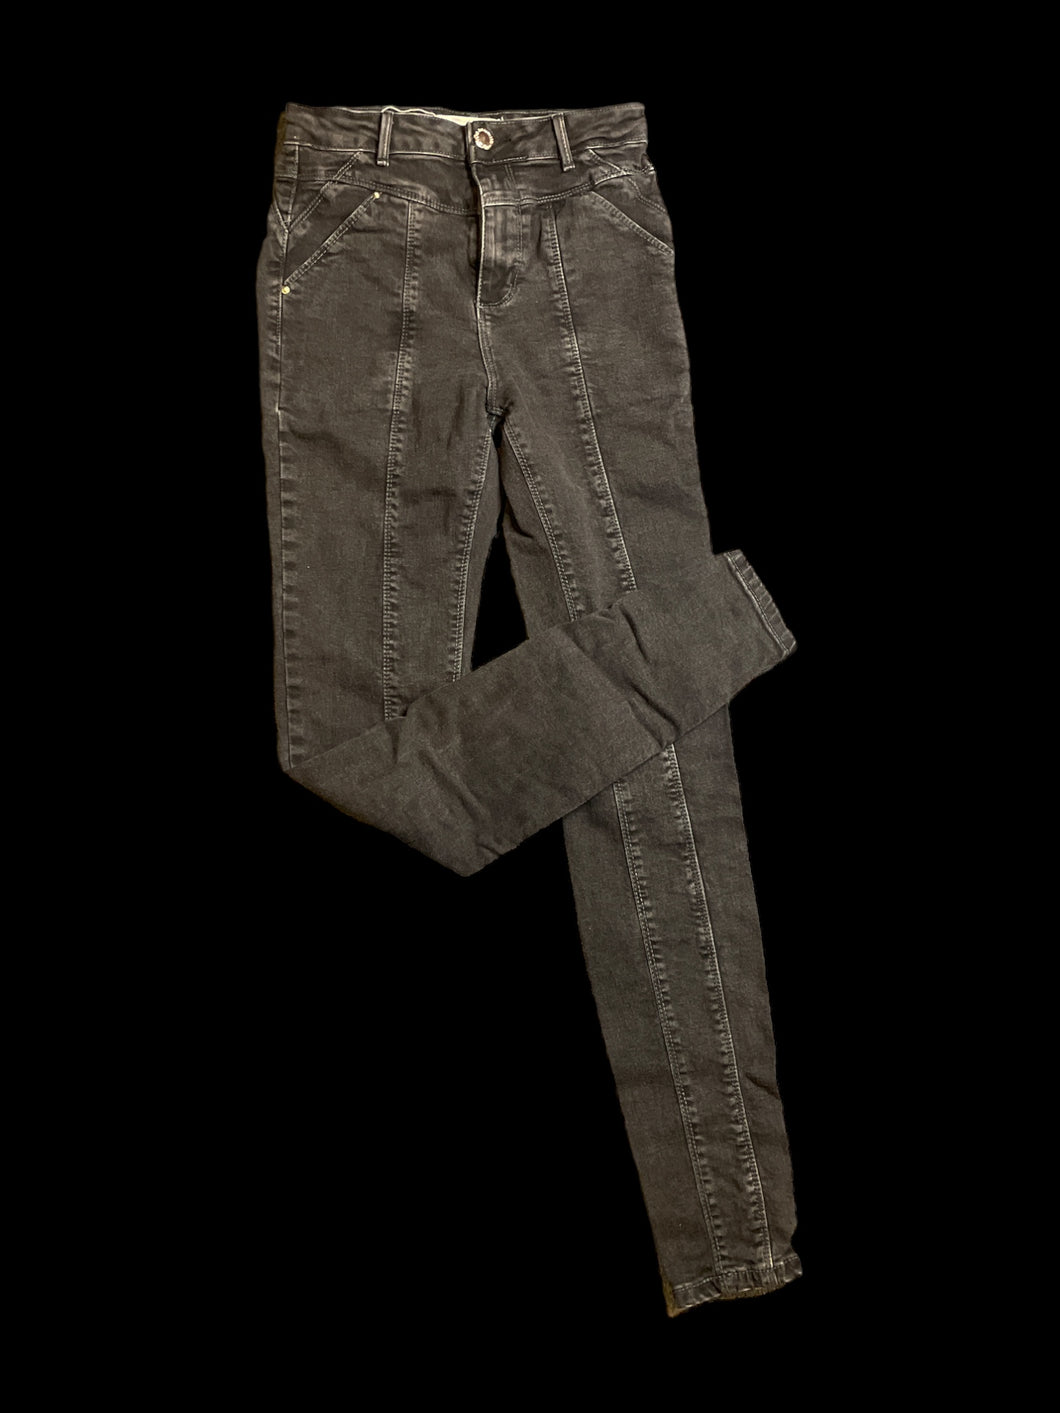 XXS Black denim jeans w/ belt loops, panelling on legs, & button/zipper closure